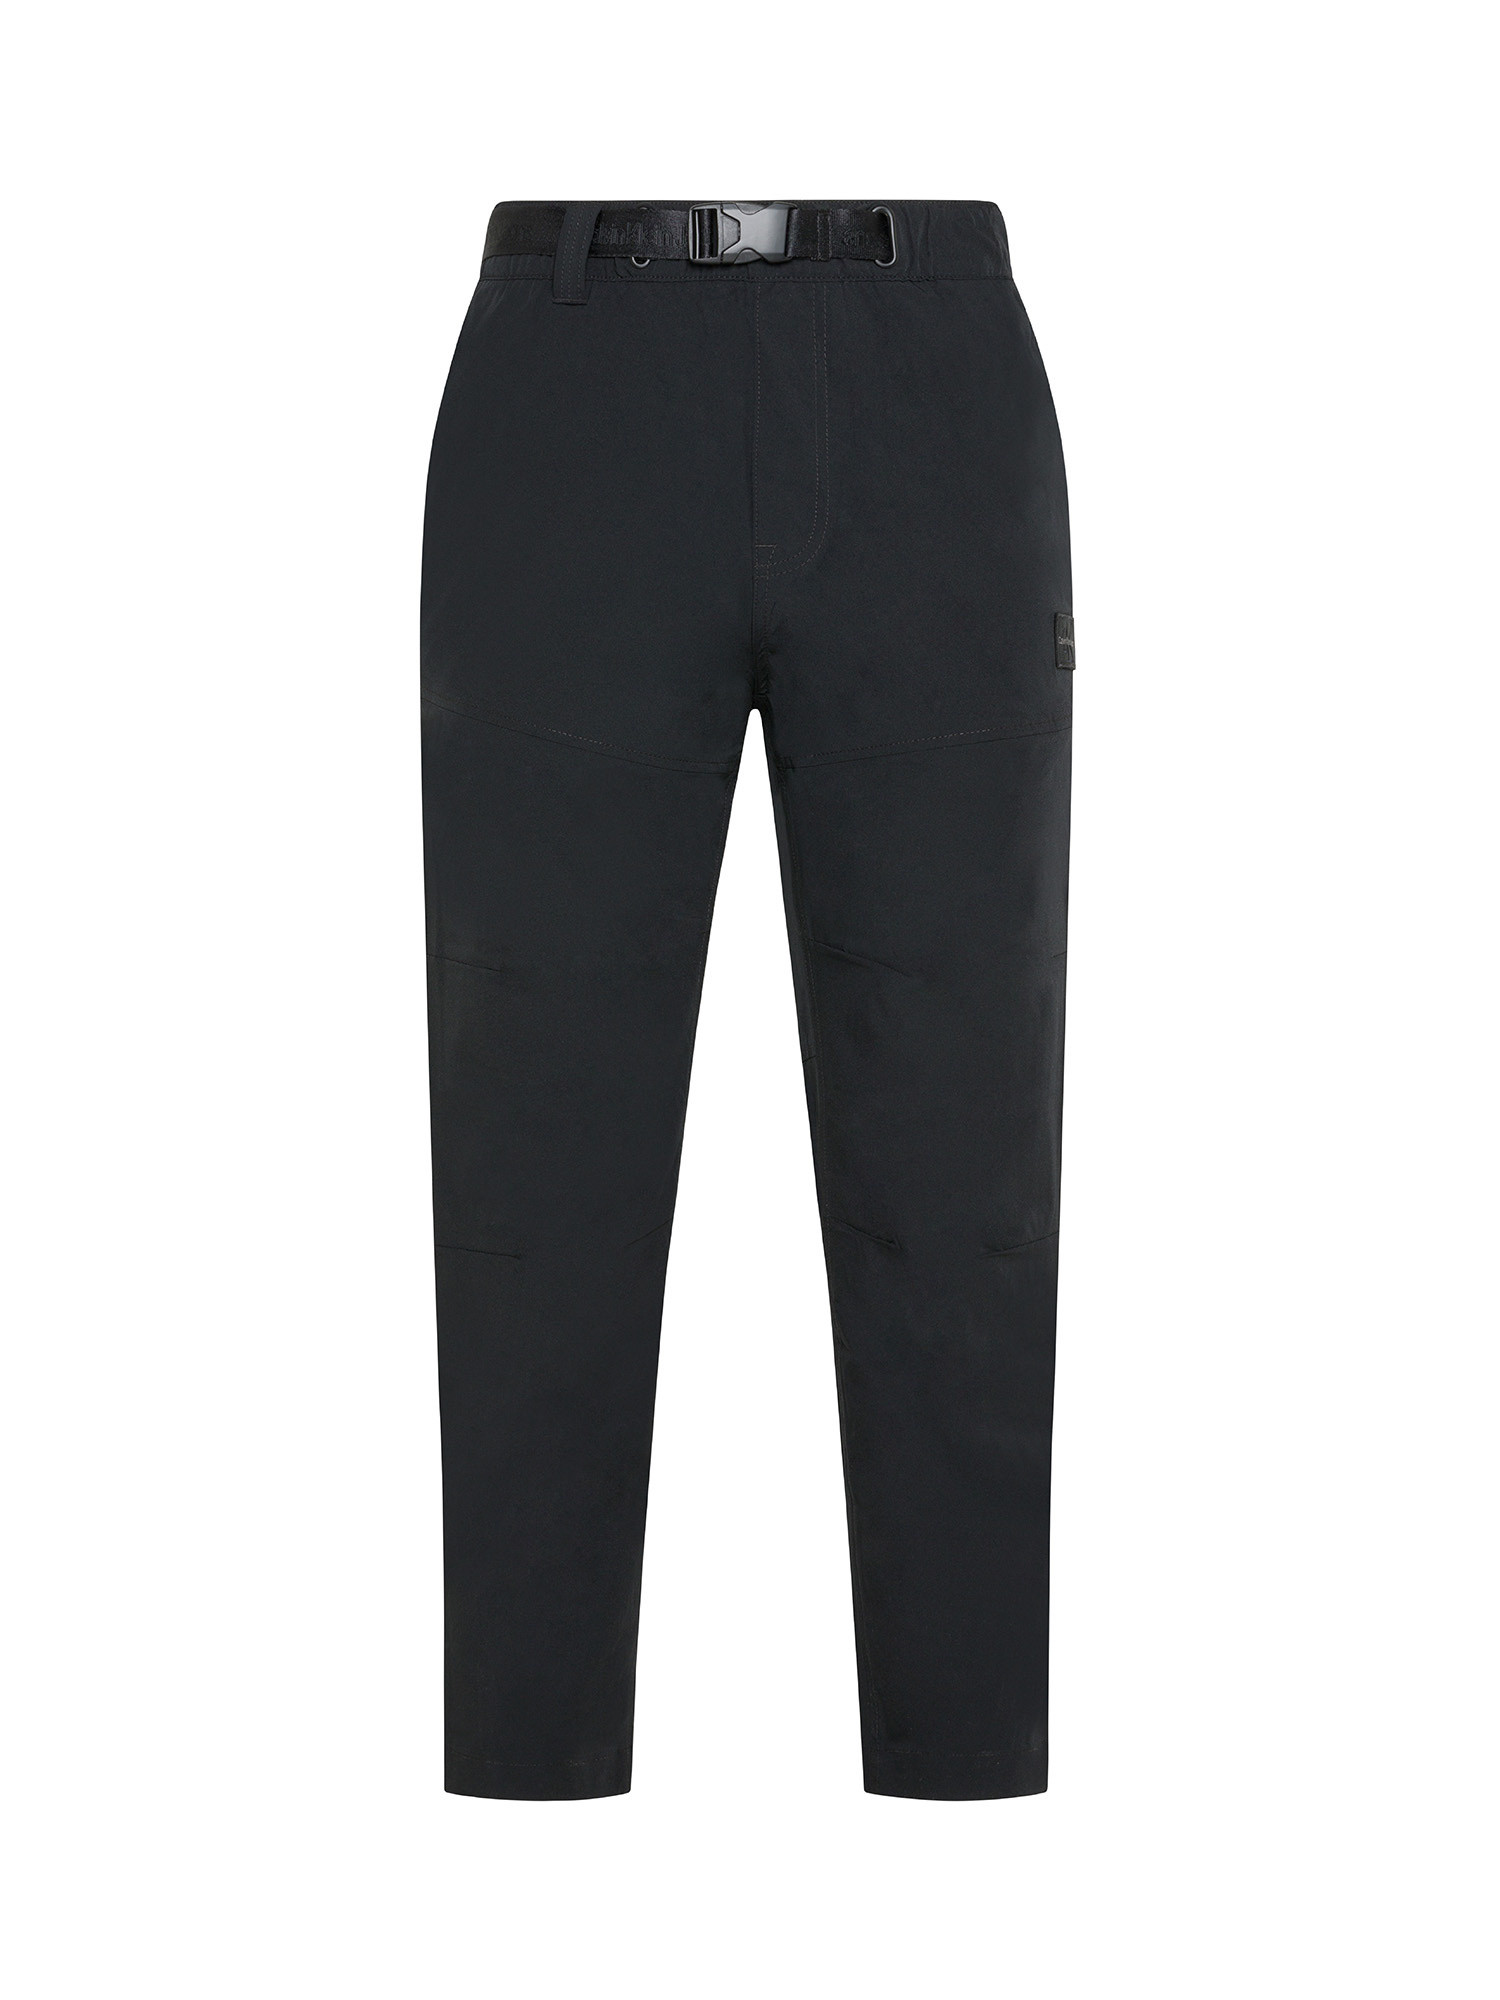 Calvin Klein Jeans - Sweatpants with logo, Black, large